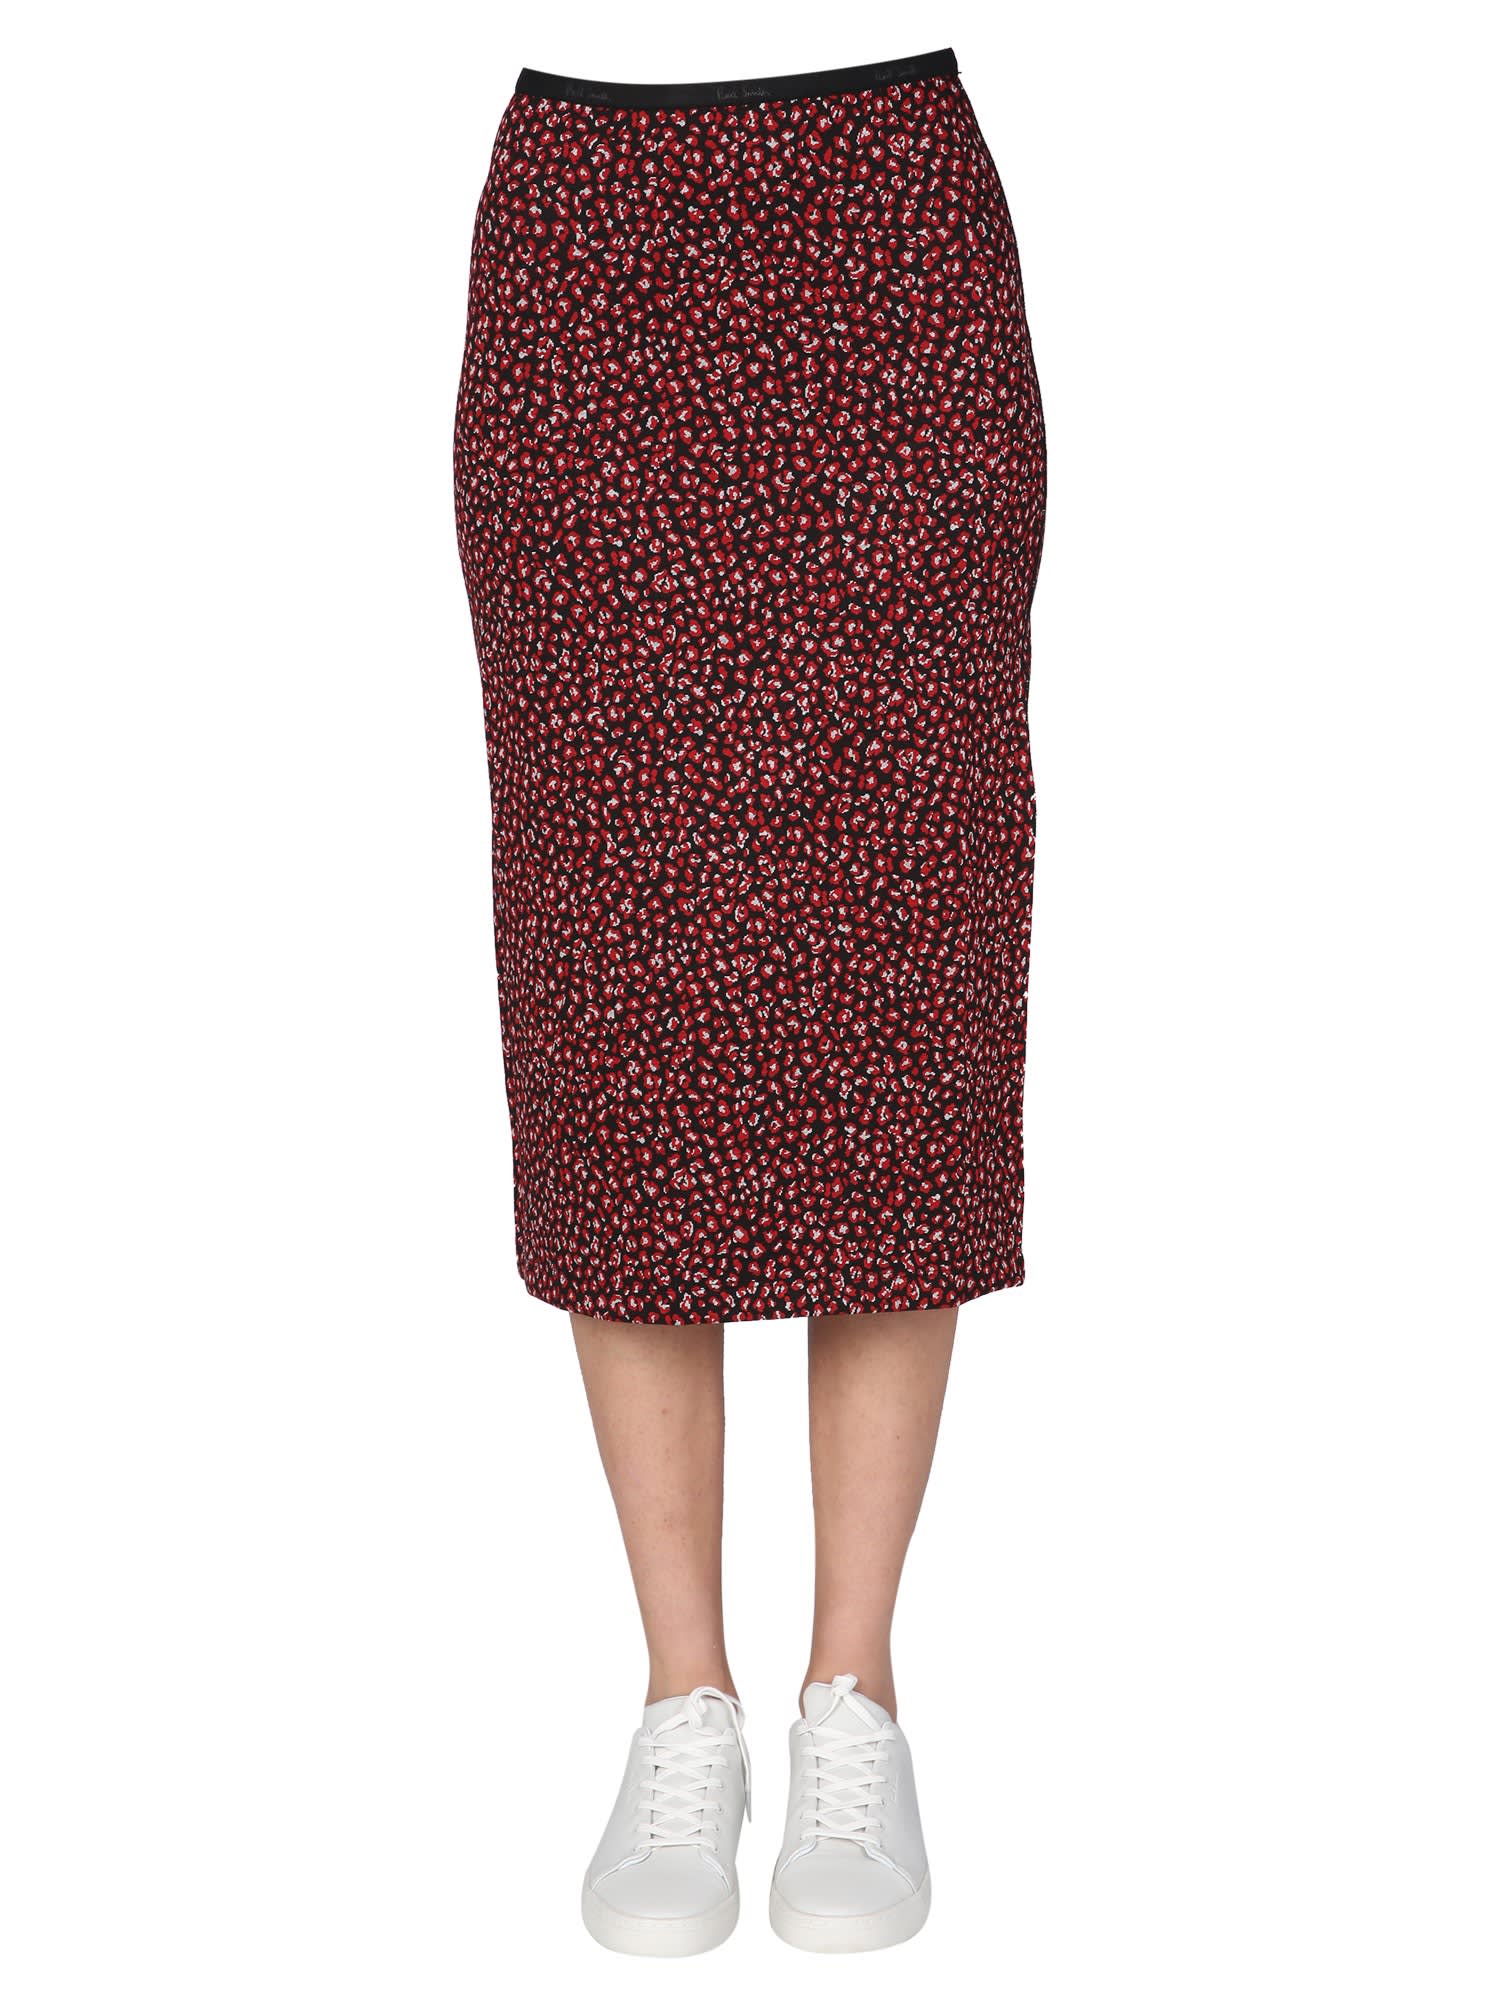 Paul Smith Printed Leopard Skirt